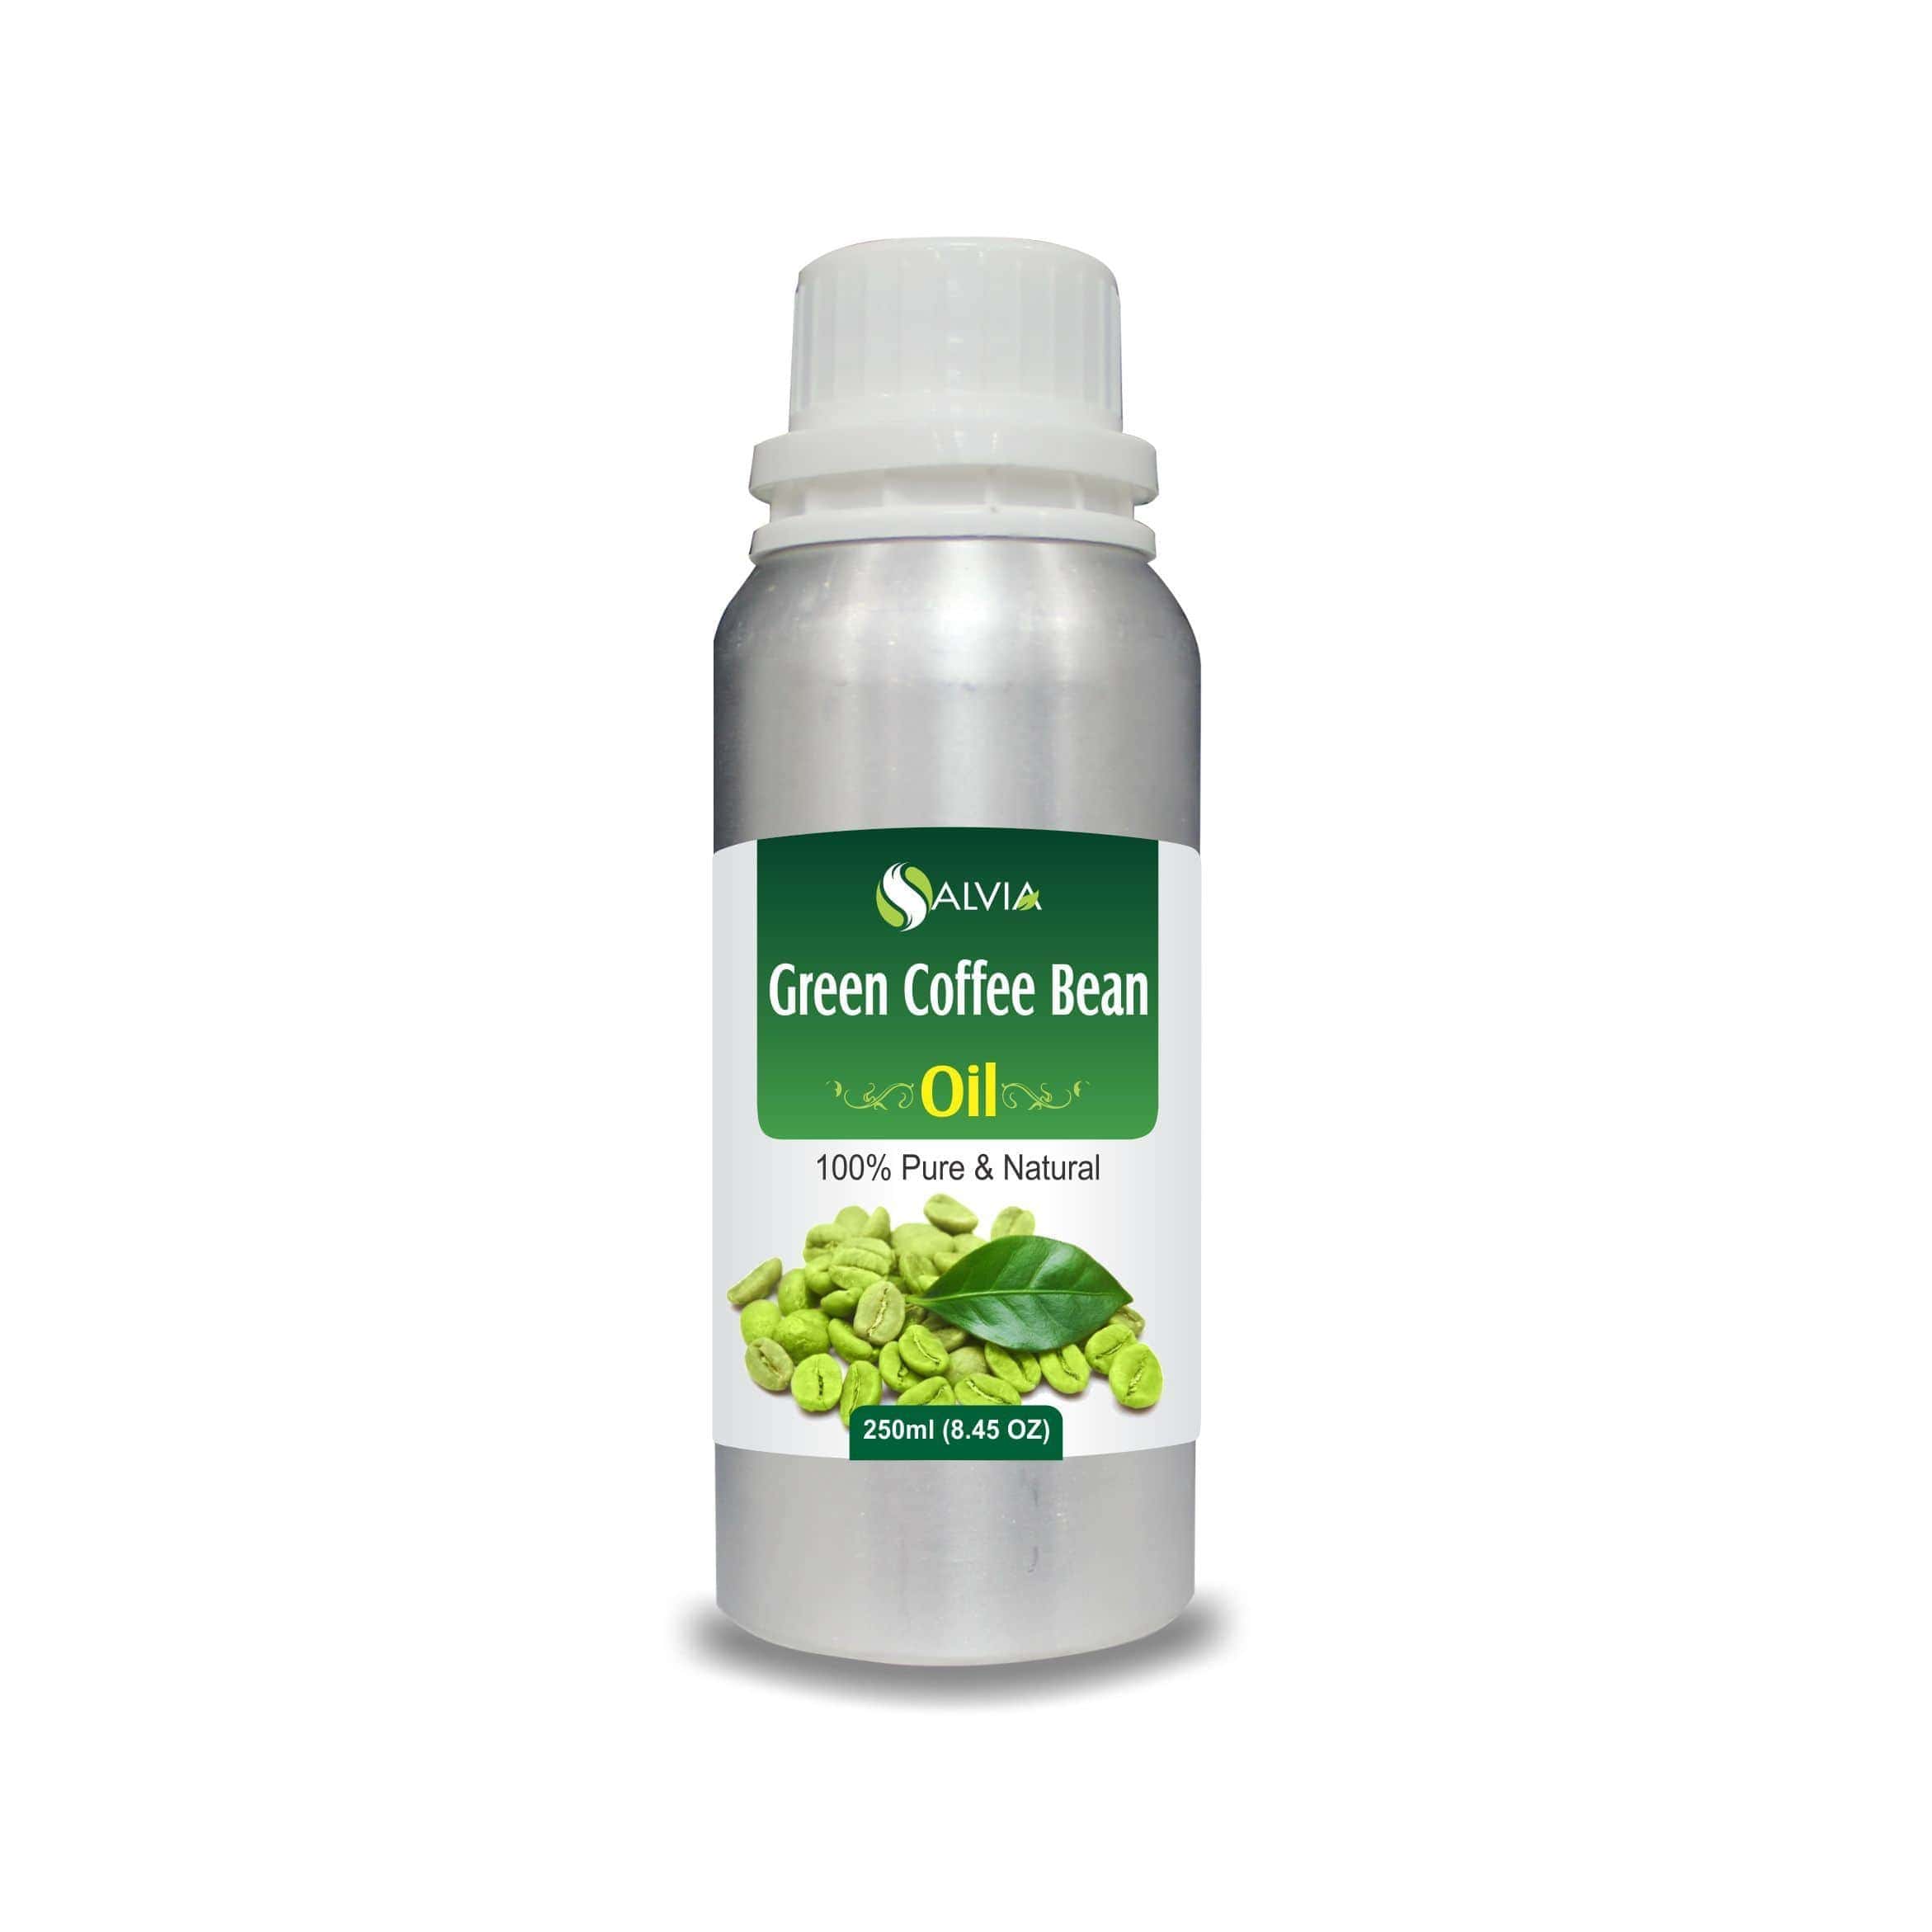  green coffee bean oil for skin